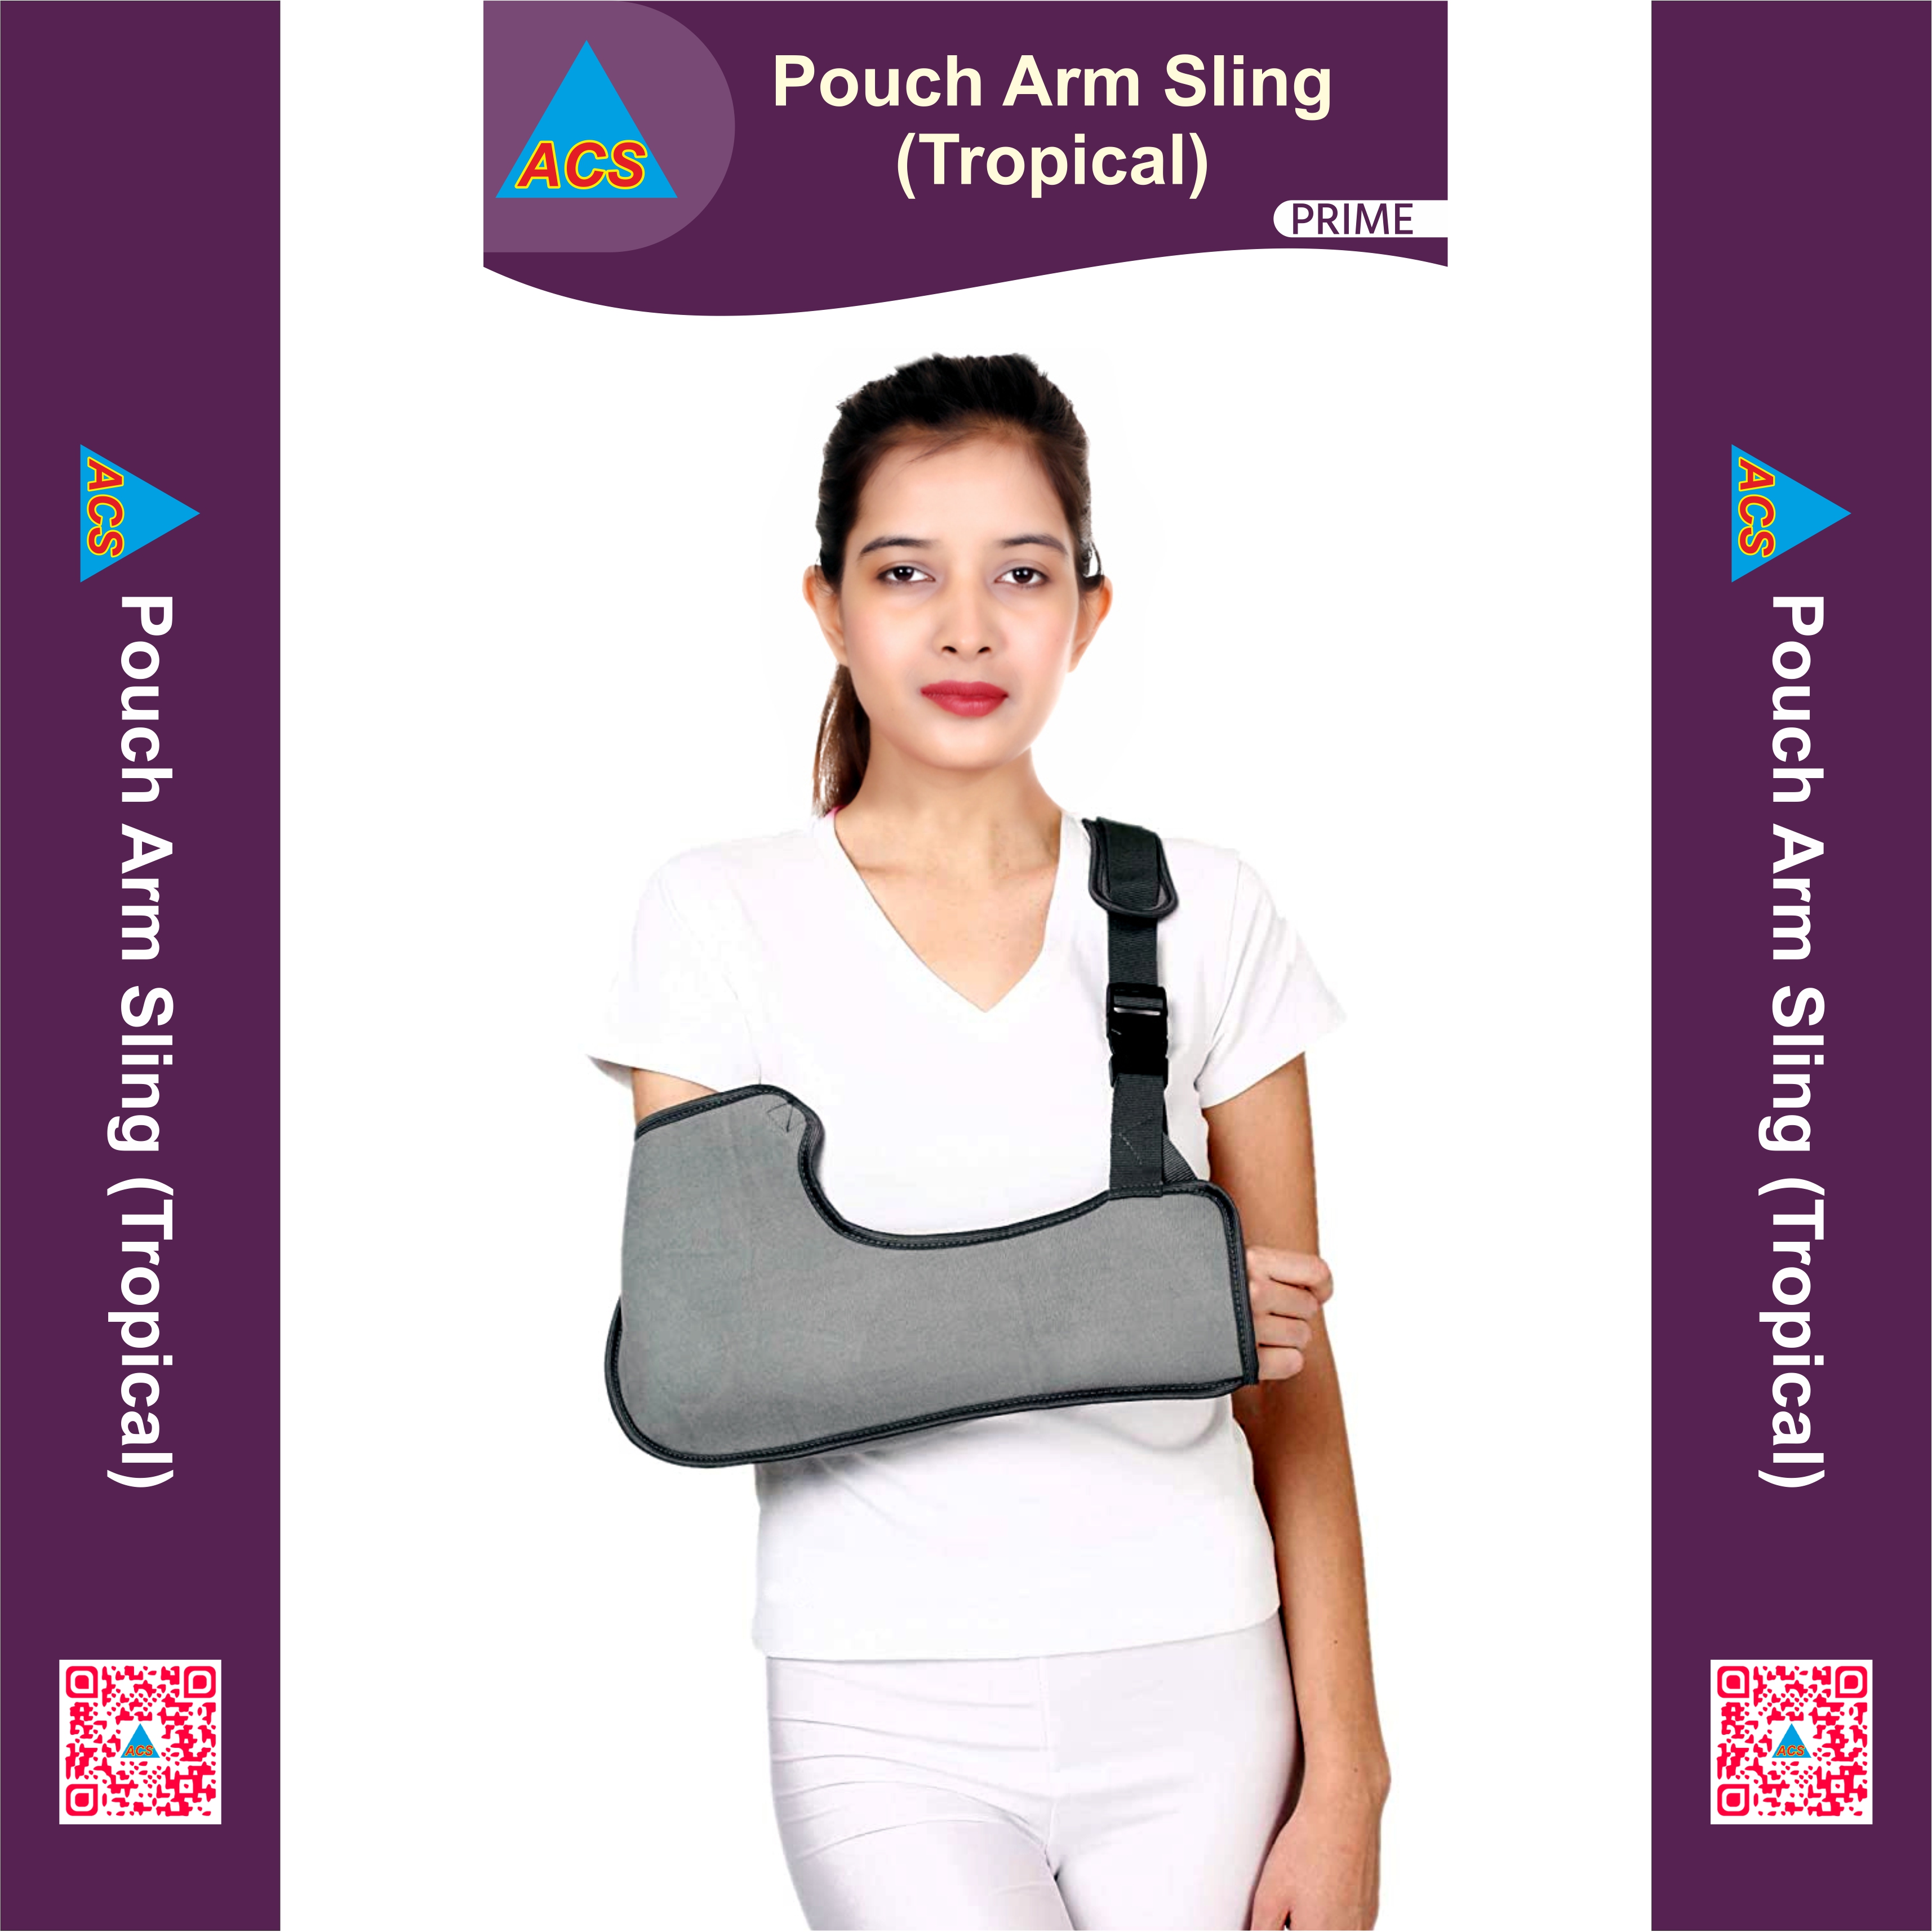 ACS Pouch Arm Sling (Tropical) Prime 